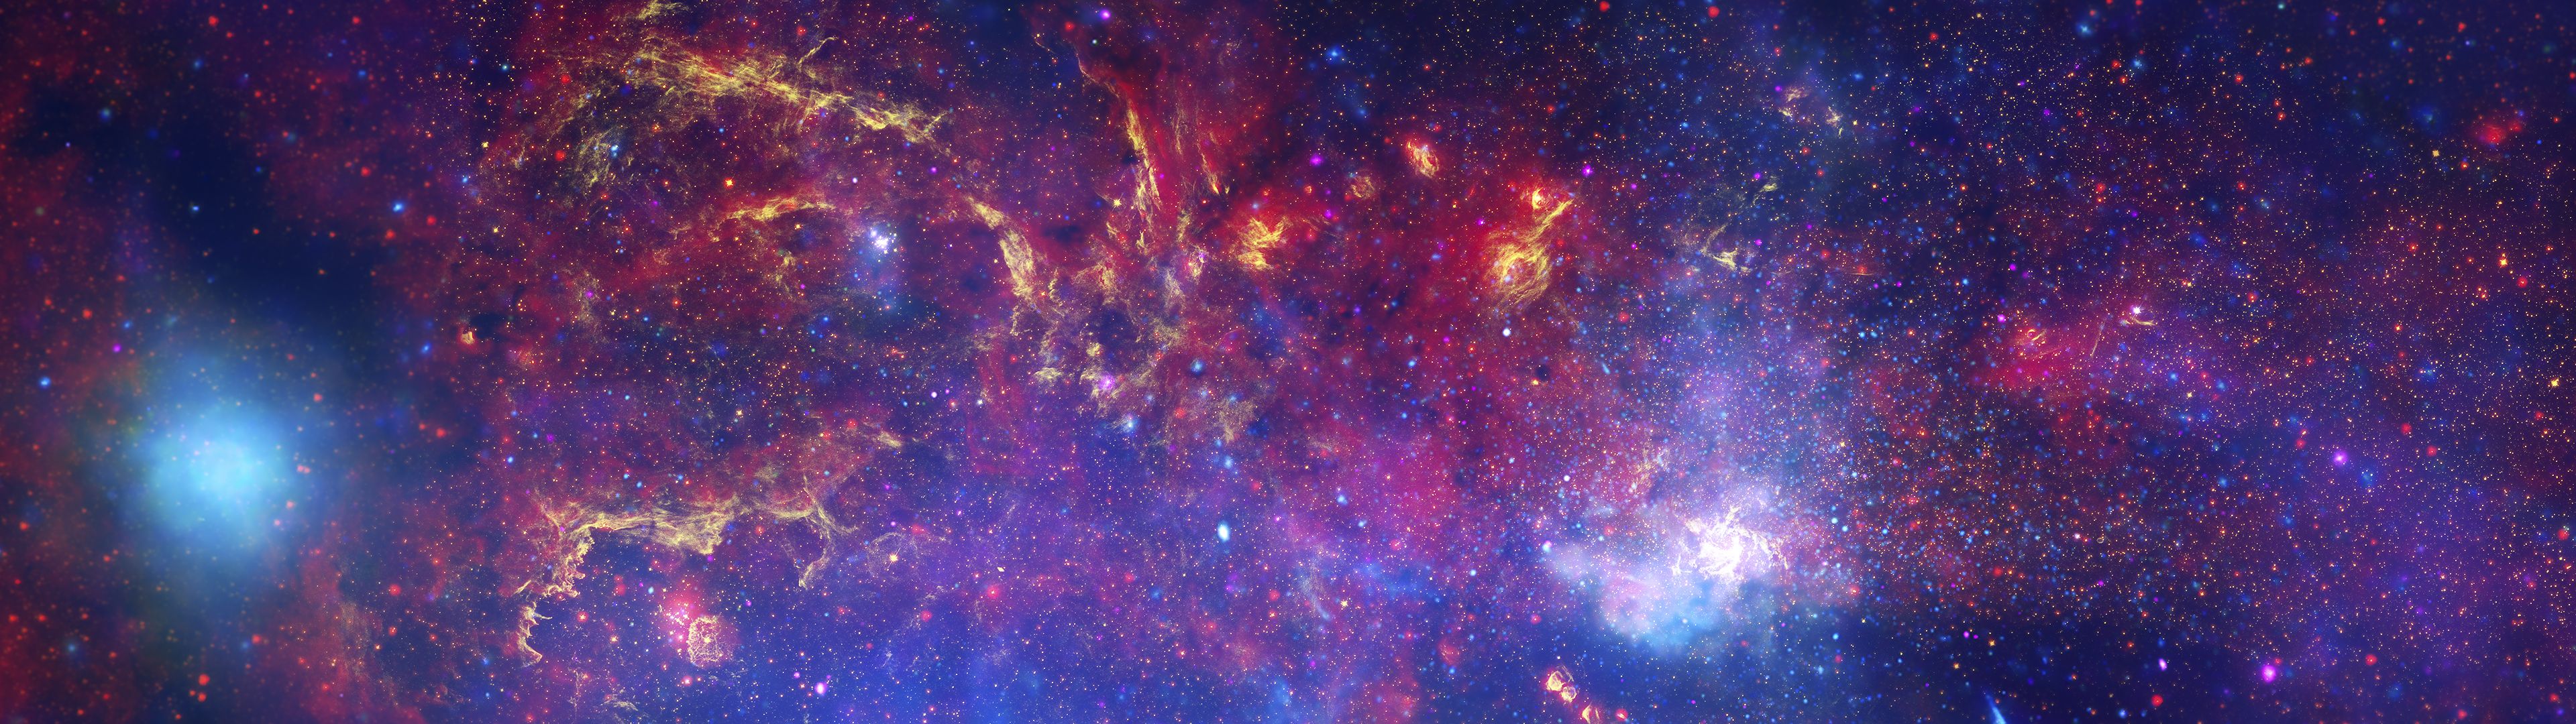 NGC 1300 desktop wallpaper 277